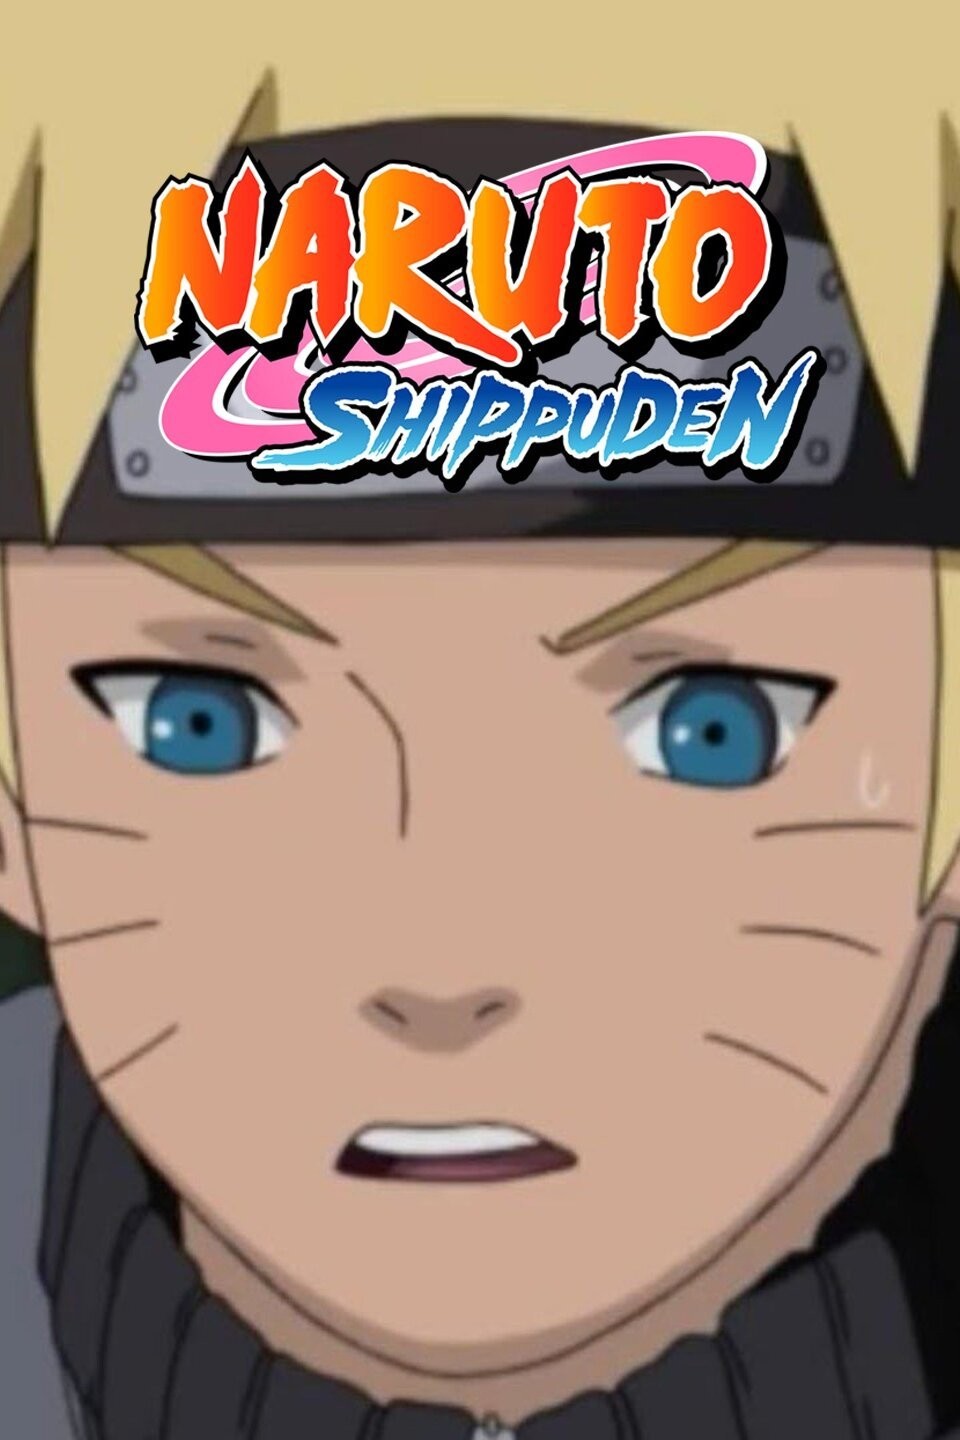 Check out “Naruto” on Netflix